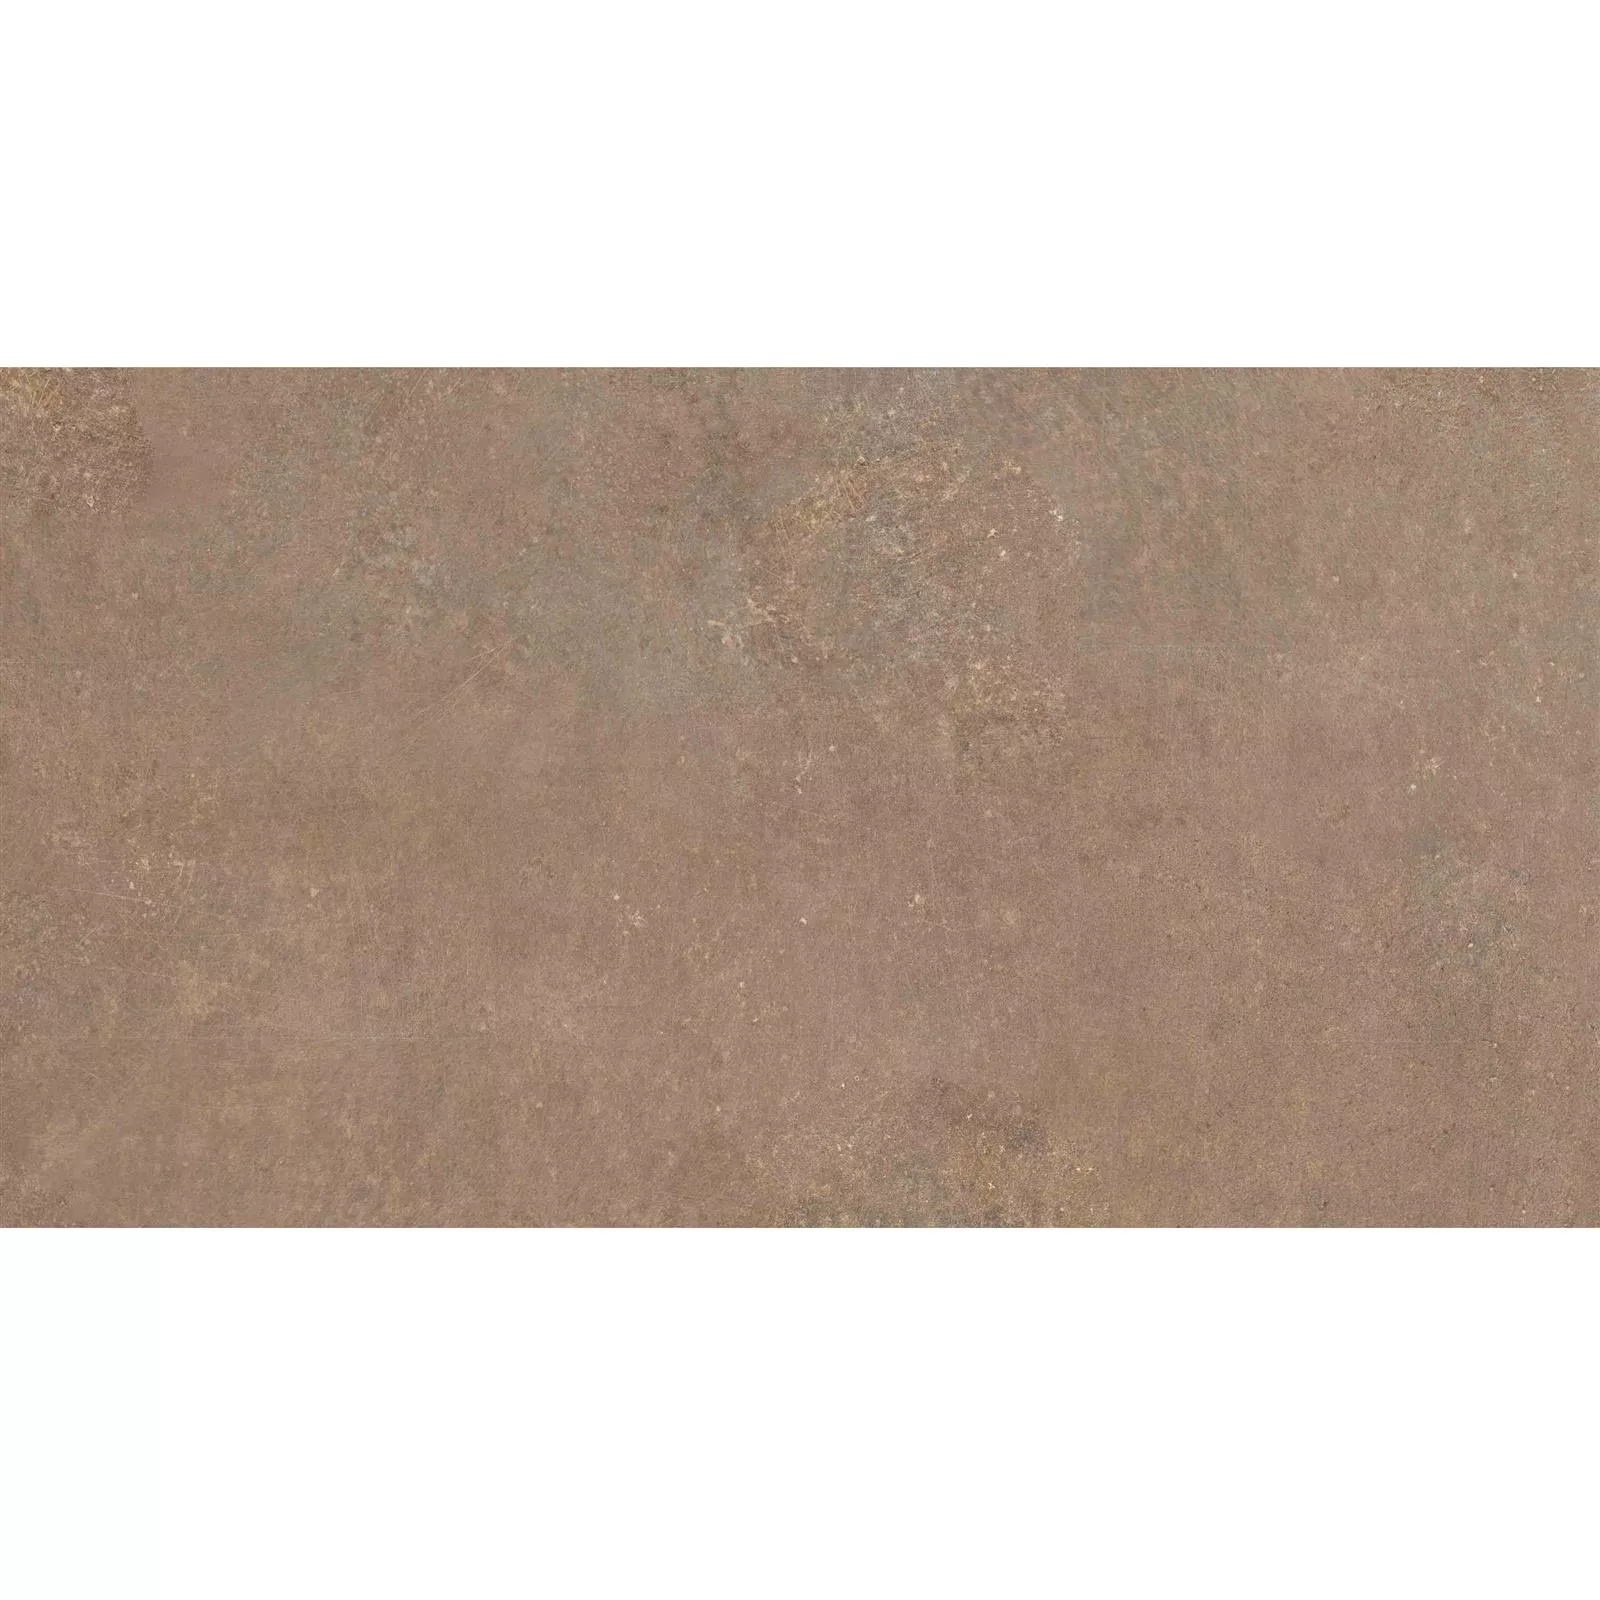 Sample Floor Tiles Peaceway Brown 30x60cm